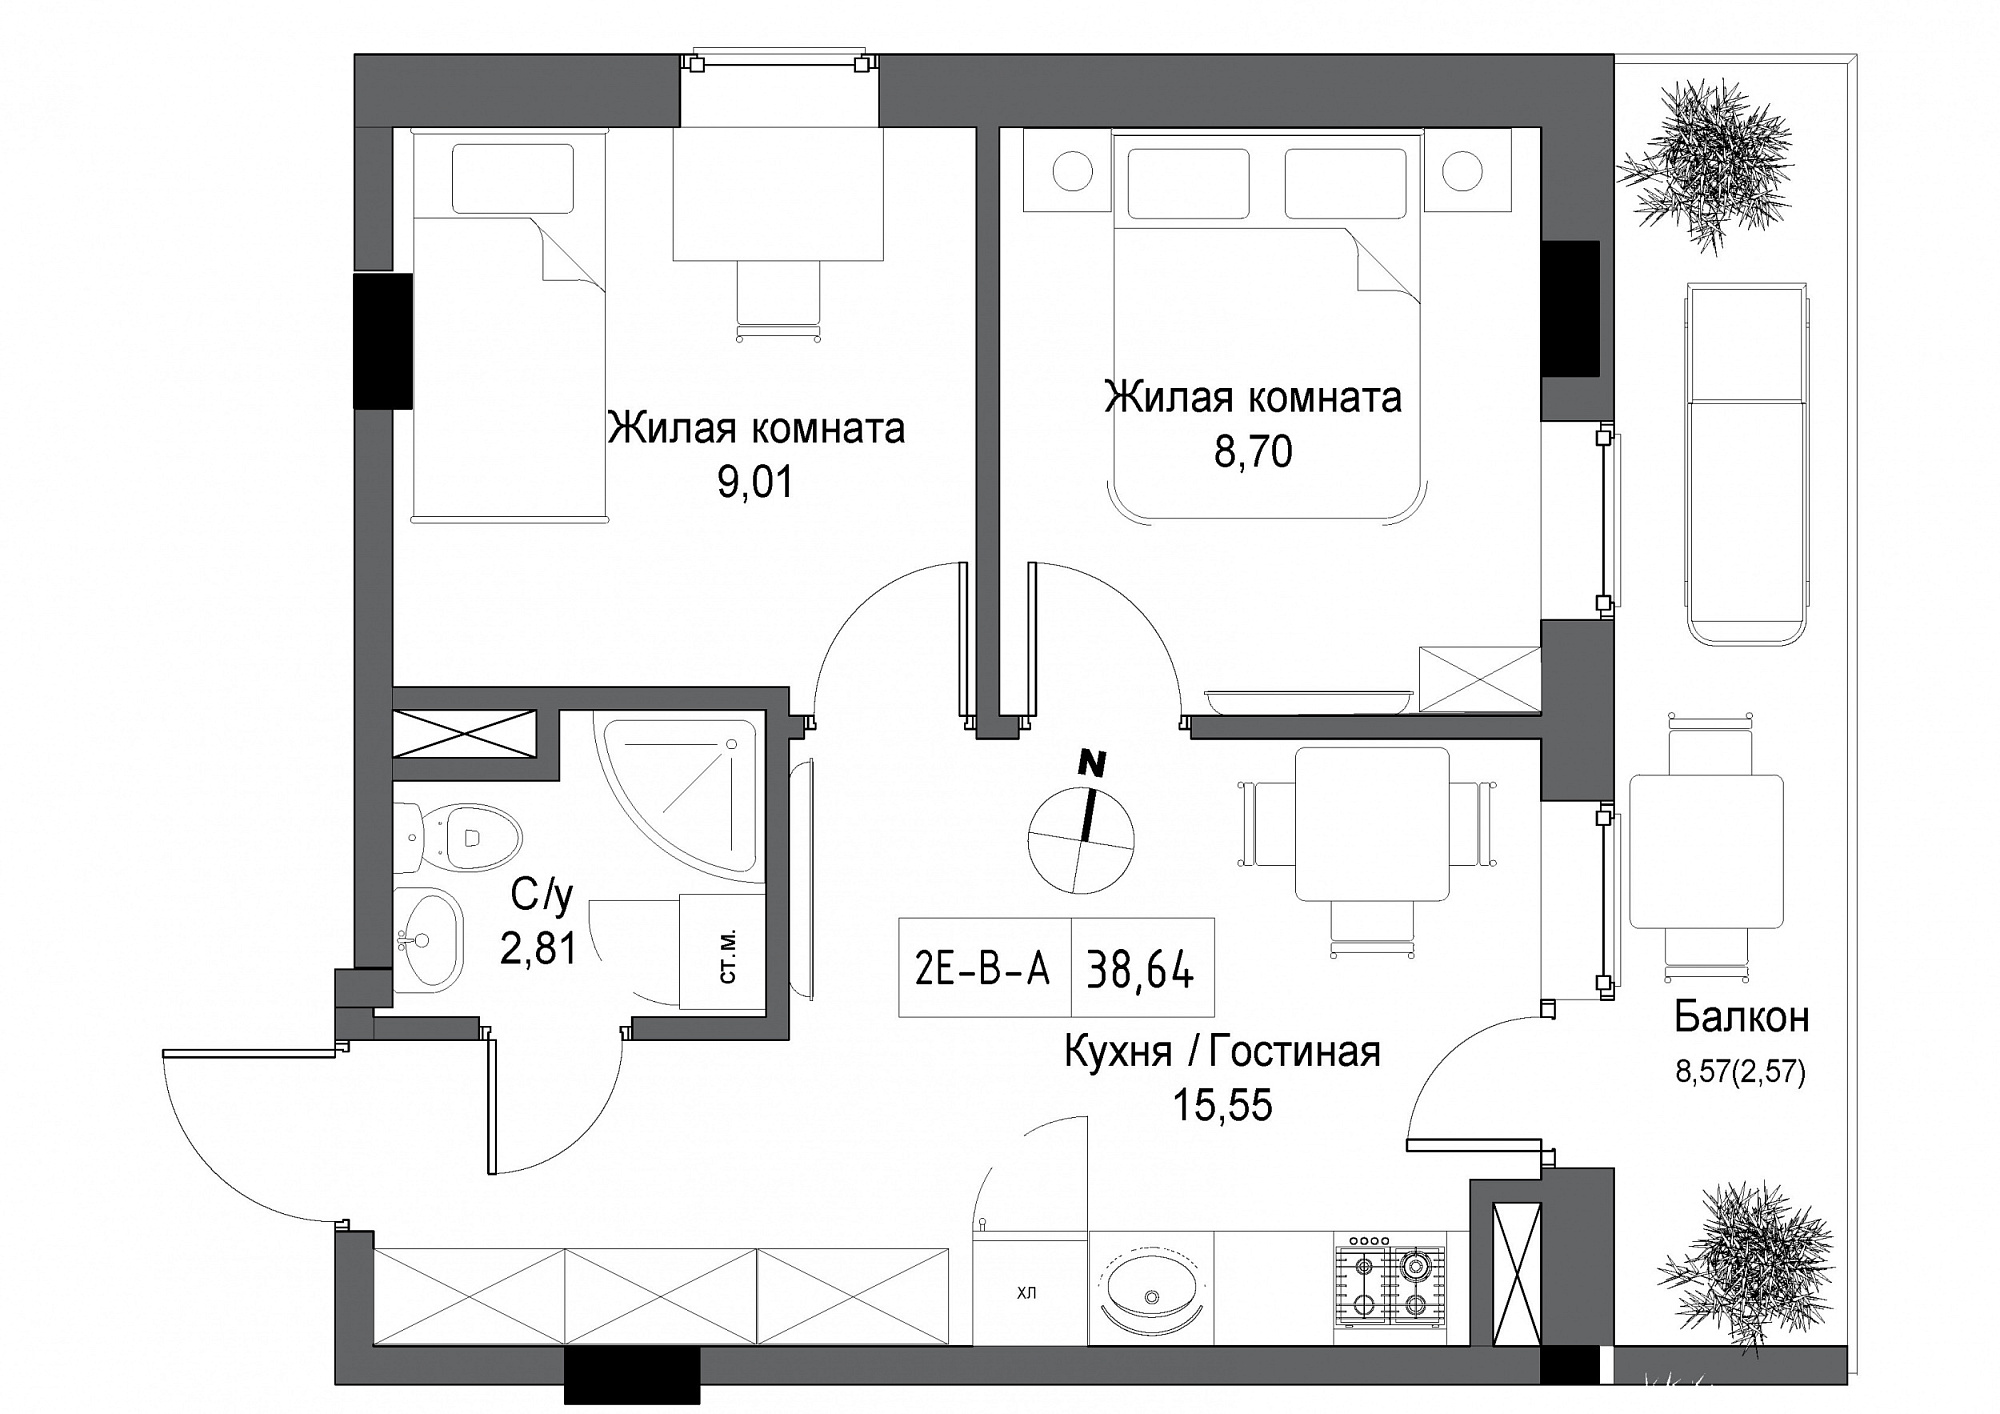 Планування 2-к квартира площею 38.64м2, UM-004-04/0005.